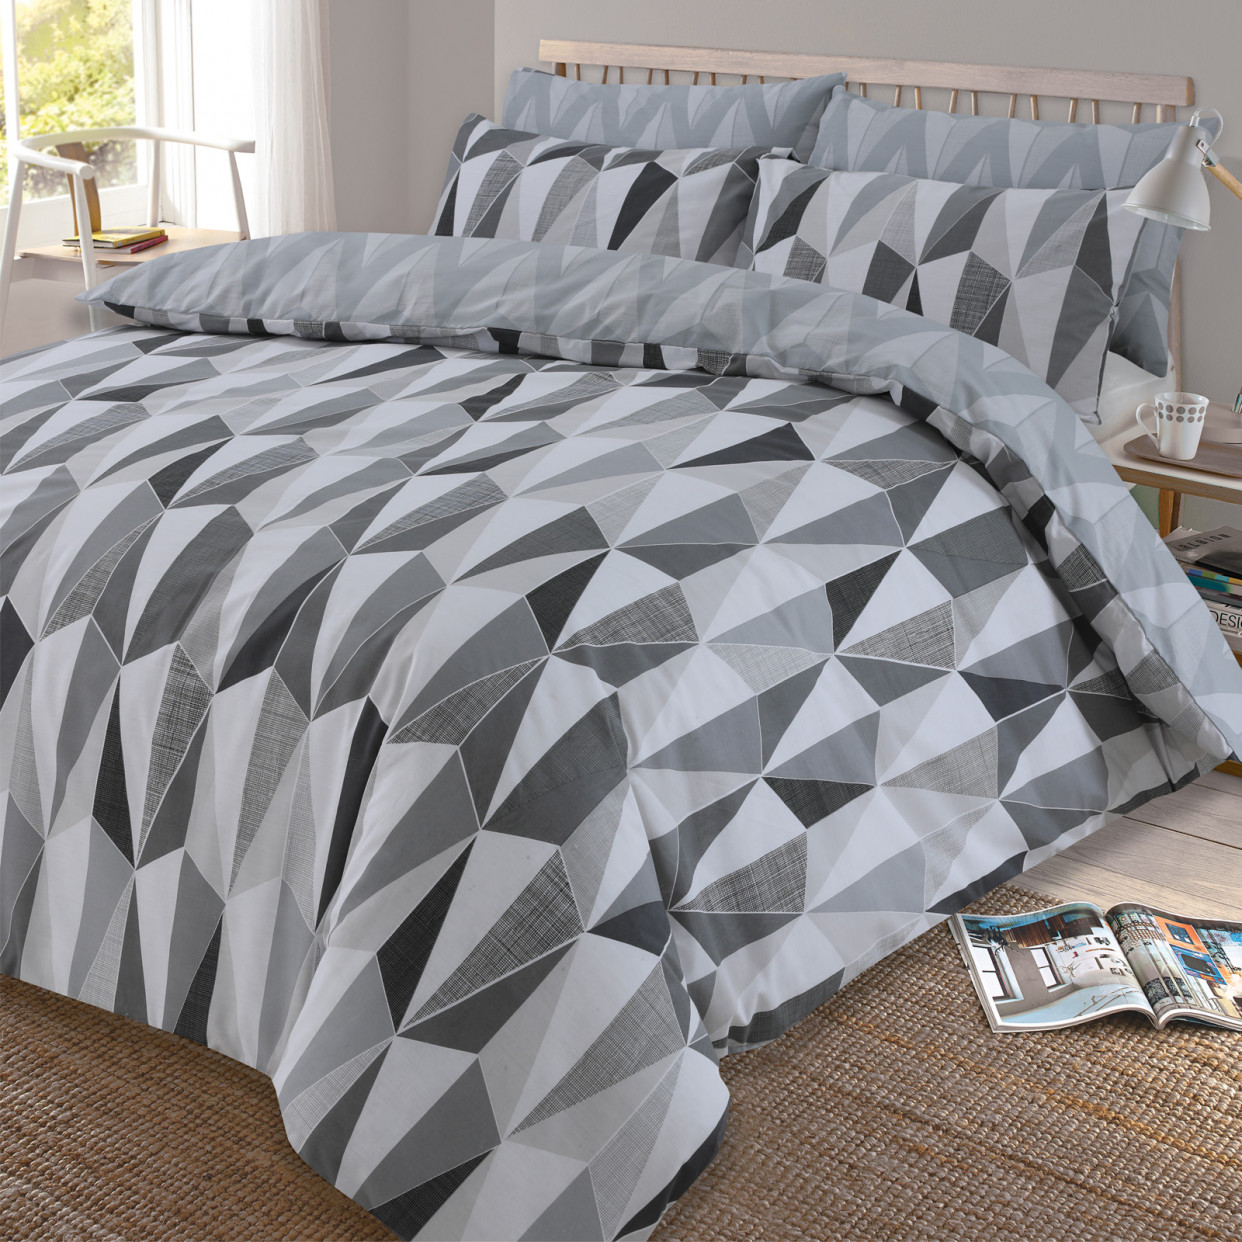 Dreamscene Billie Duvet Cover with Pillowcase Reversible Geometric Triangle Bedding Set, Black Grey Silver - Double>